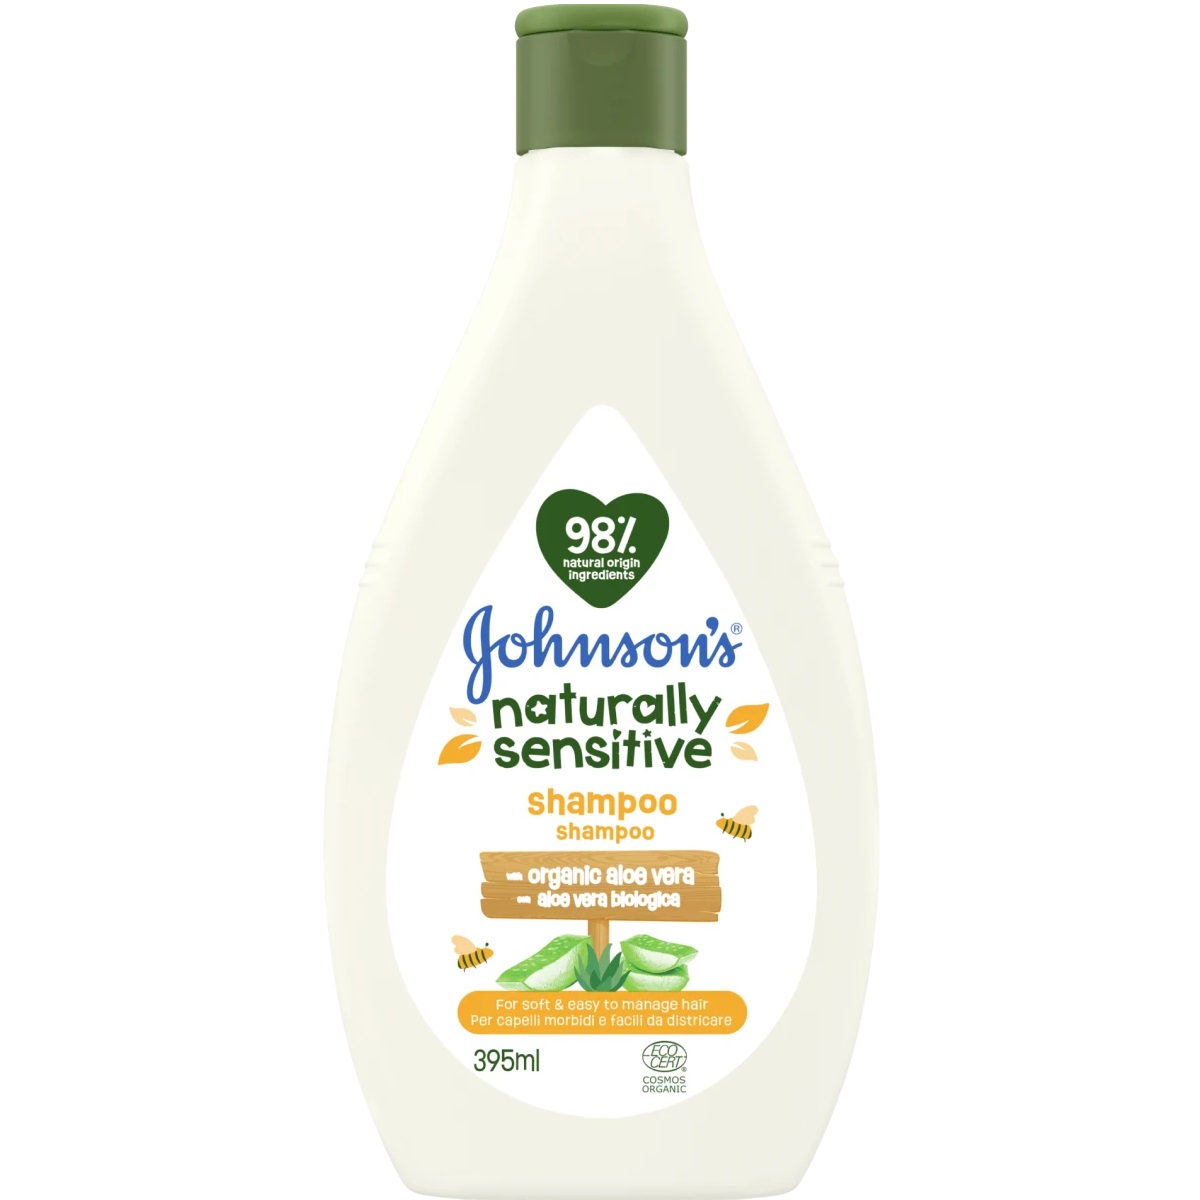 Johnsons Baby naturally sensitive sampon, 395 ml, Johnson & Johnson